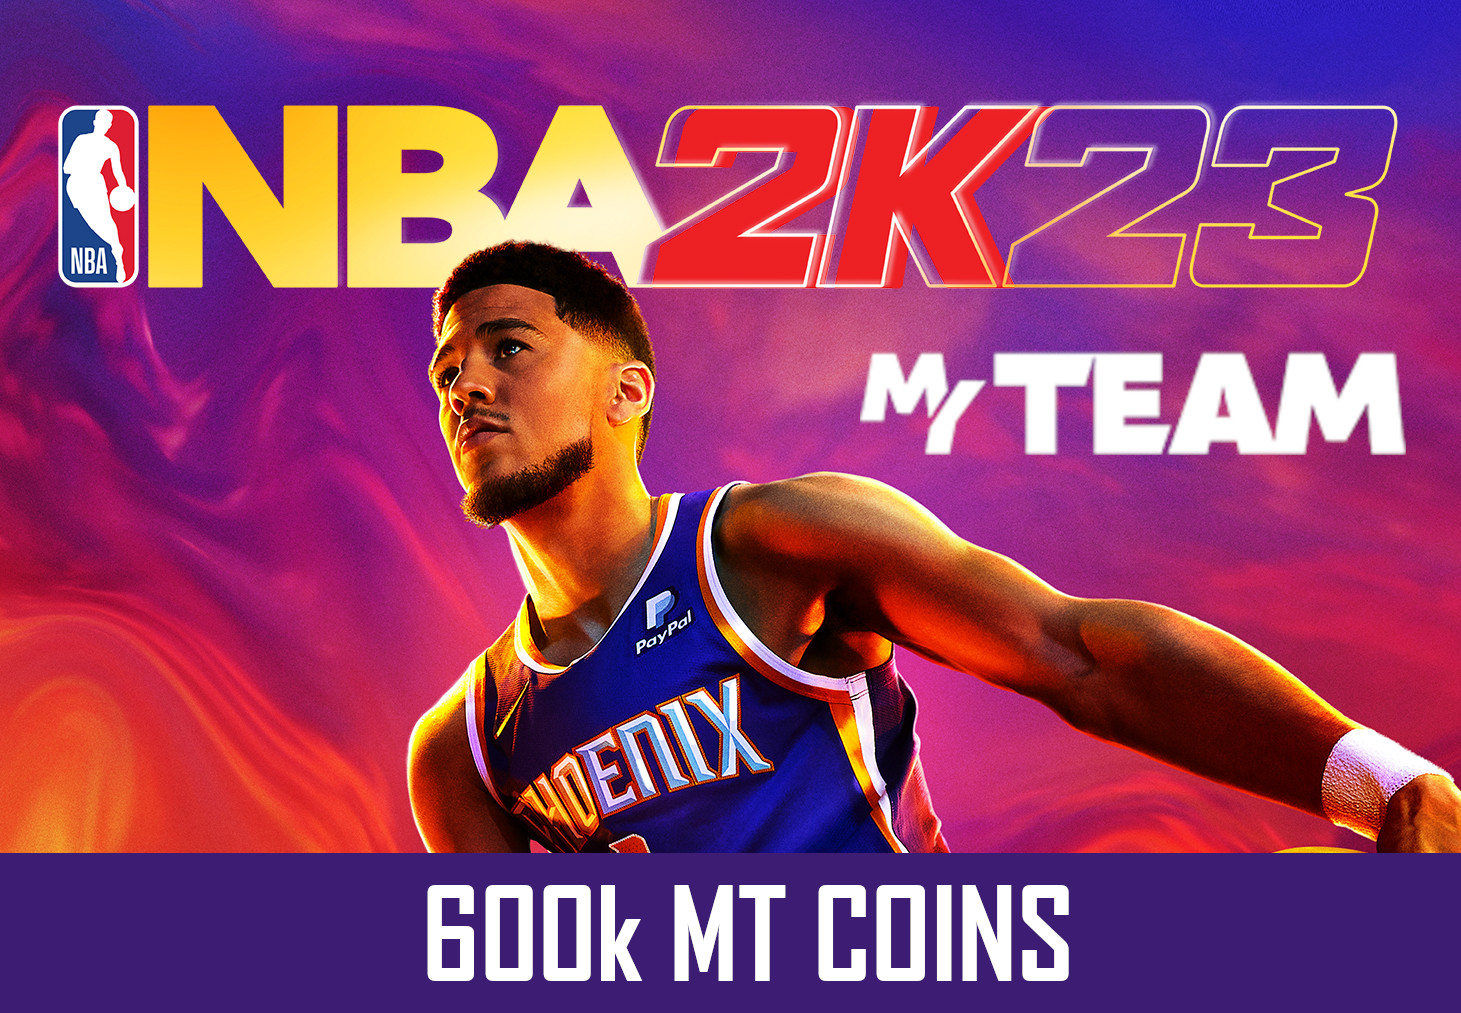 NBA 2K23 - 600k MT Coins - GLOBAL PC